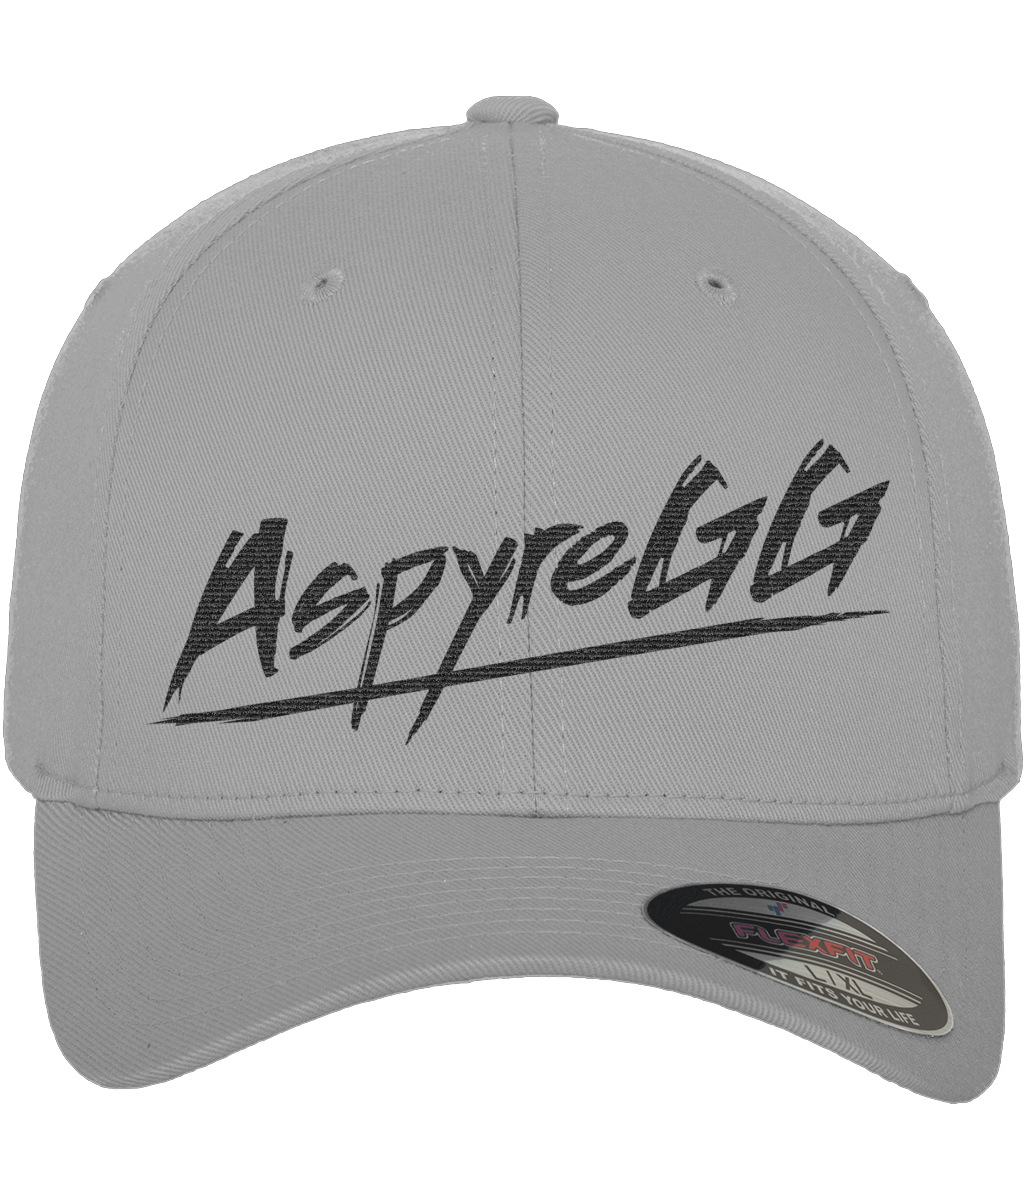 AspyreGG Premium Fitted Baseball Cap